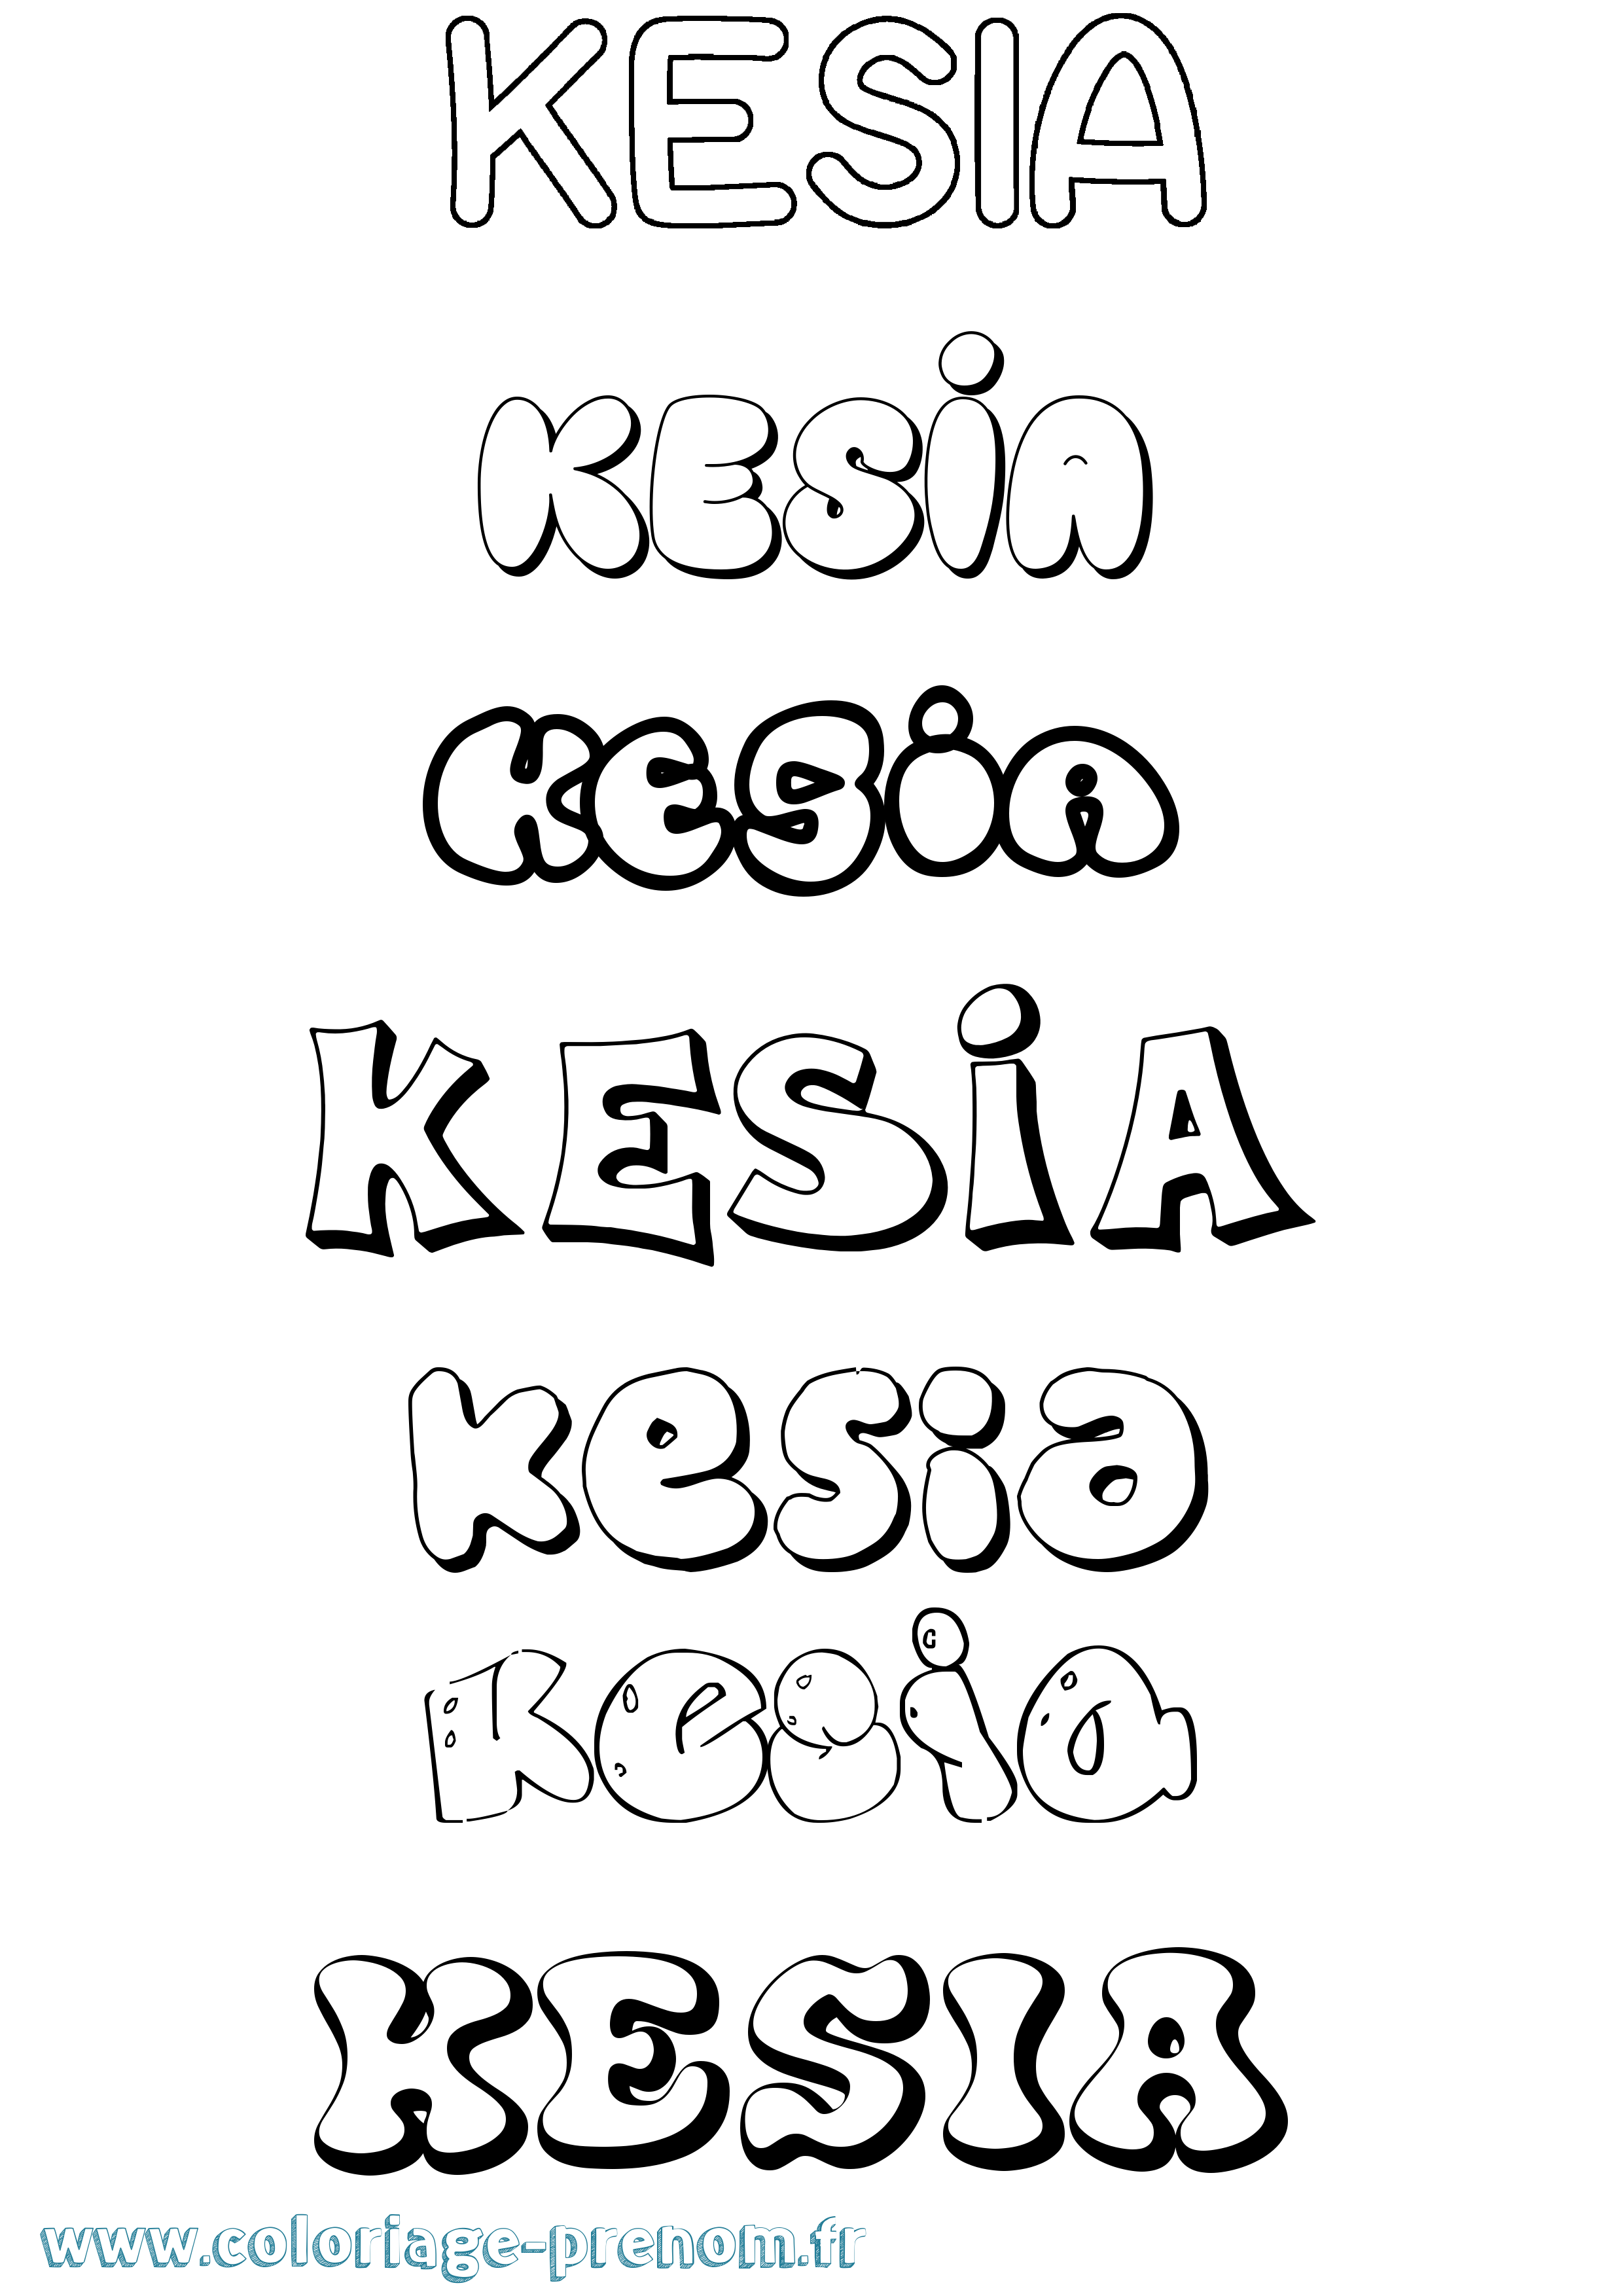 Coloriage prénom Kesia Bubble